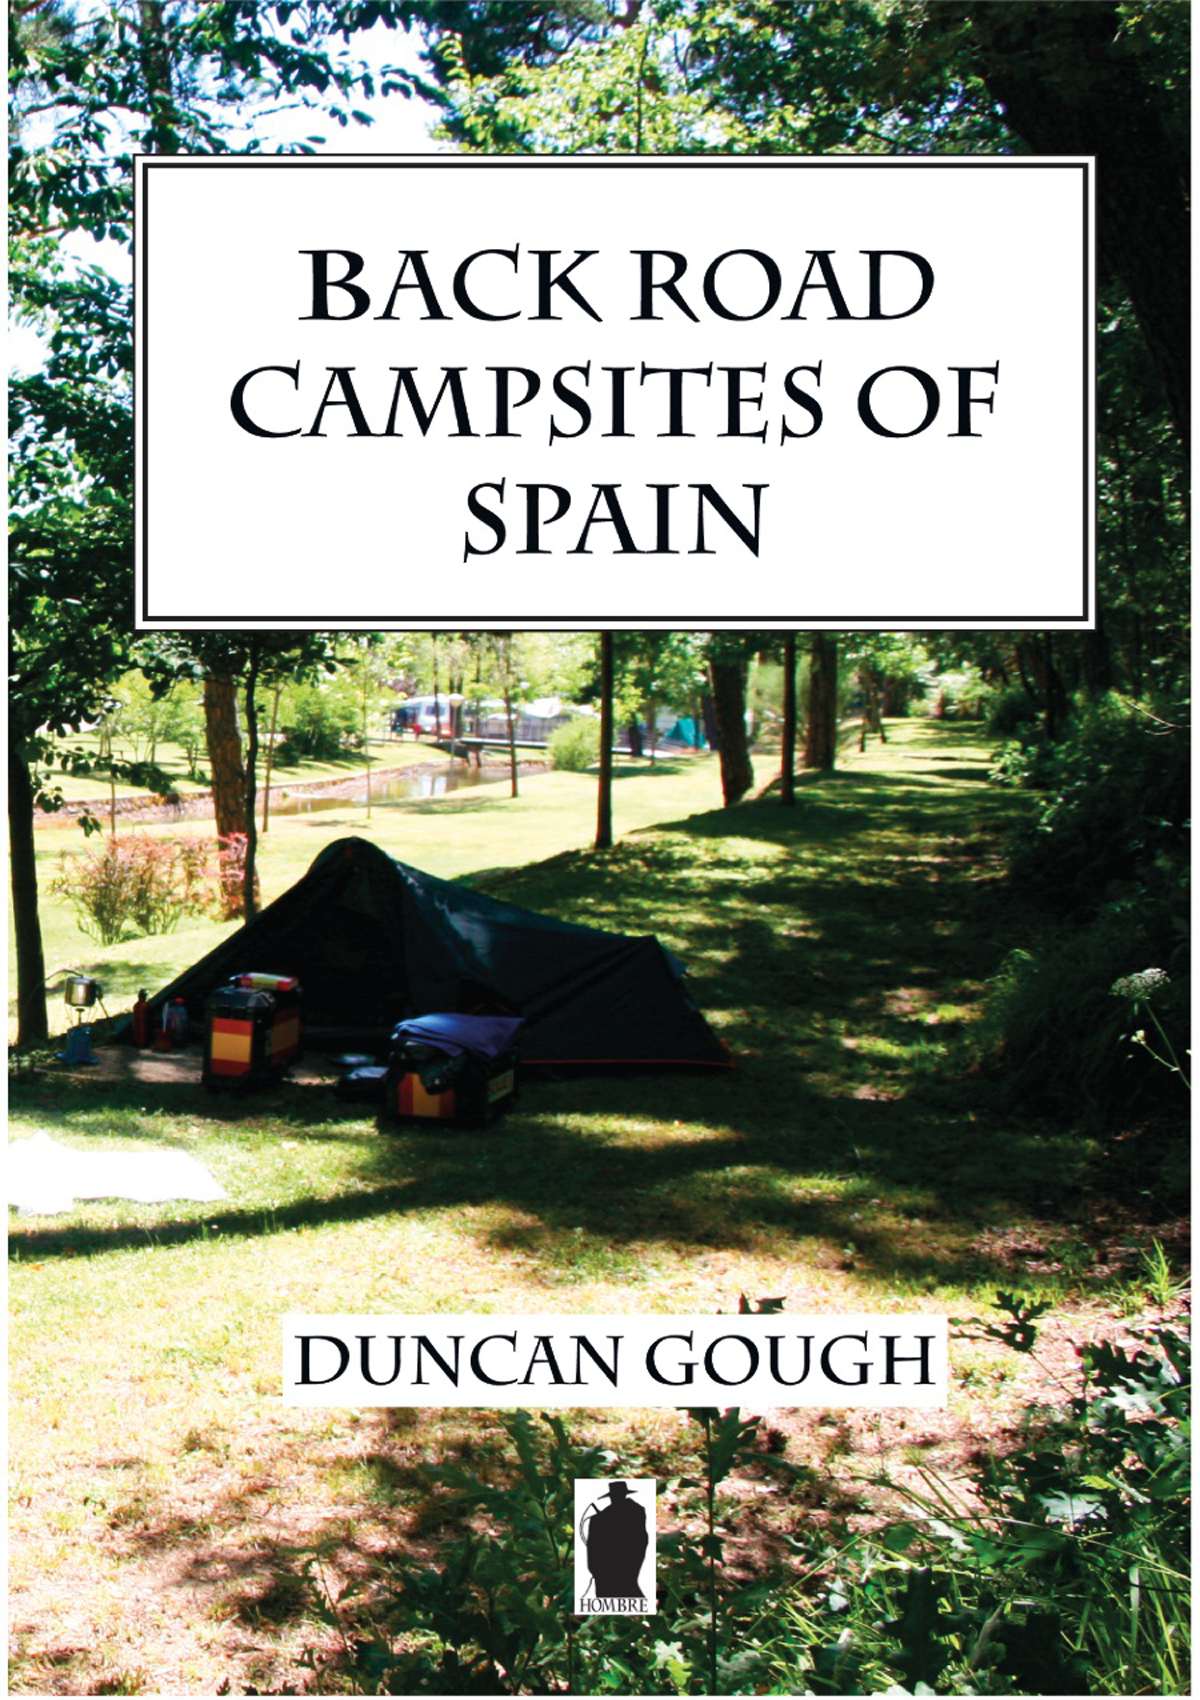 Back Roads campsites of Spain